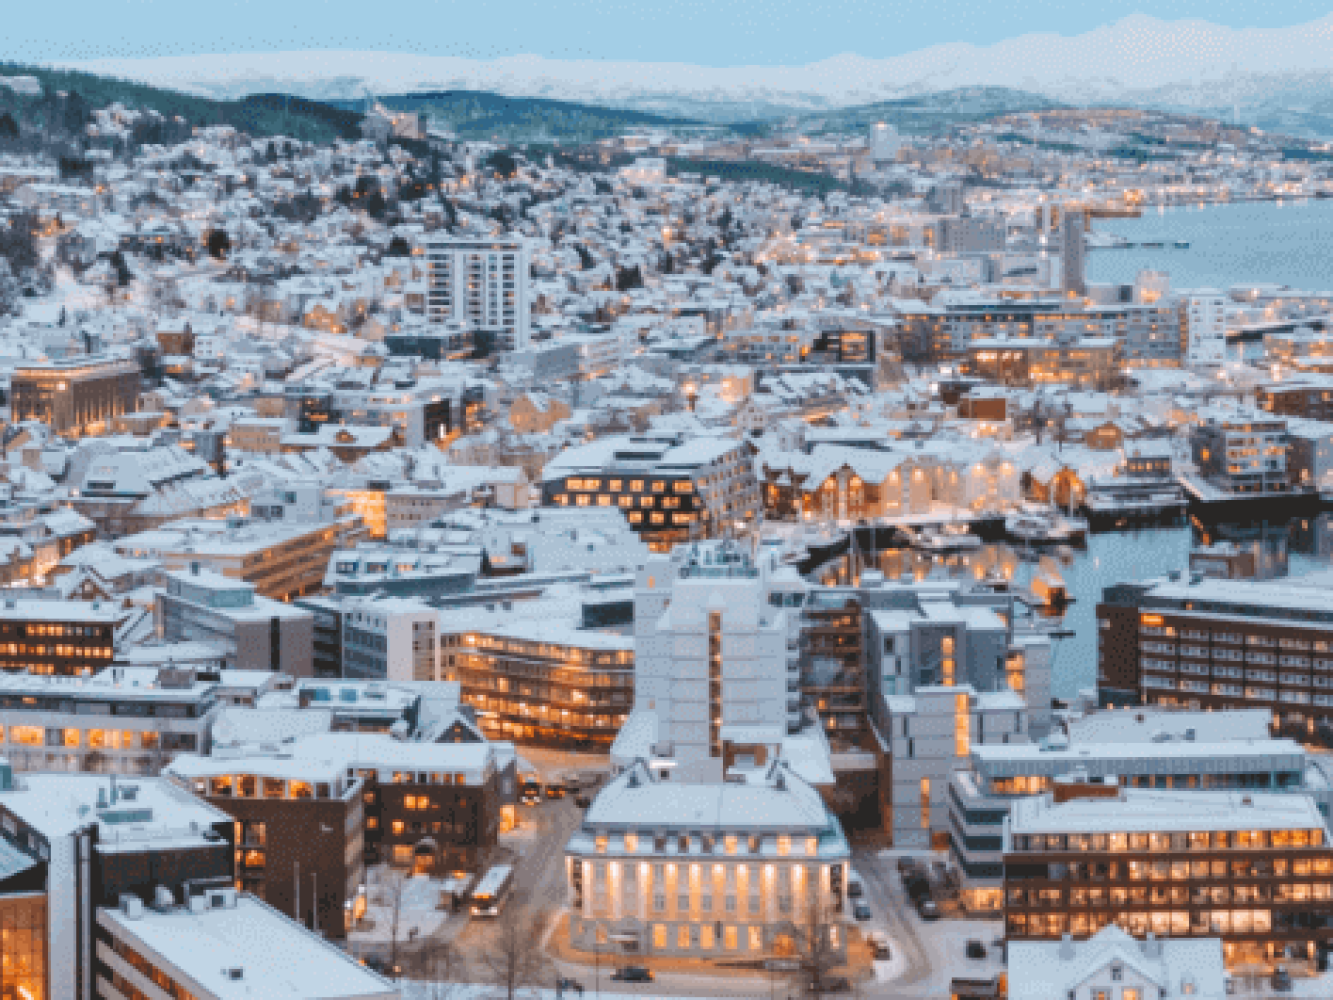 Tromsø city centre in winter seen from above